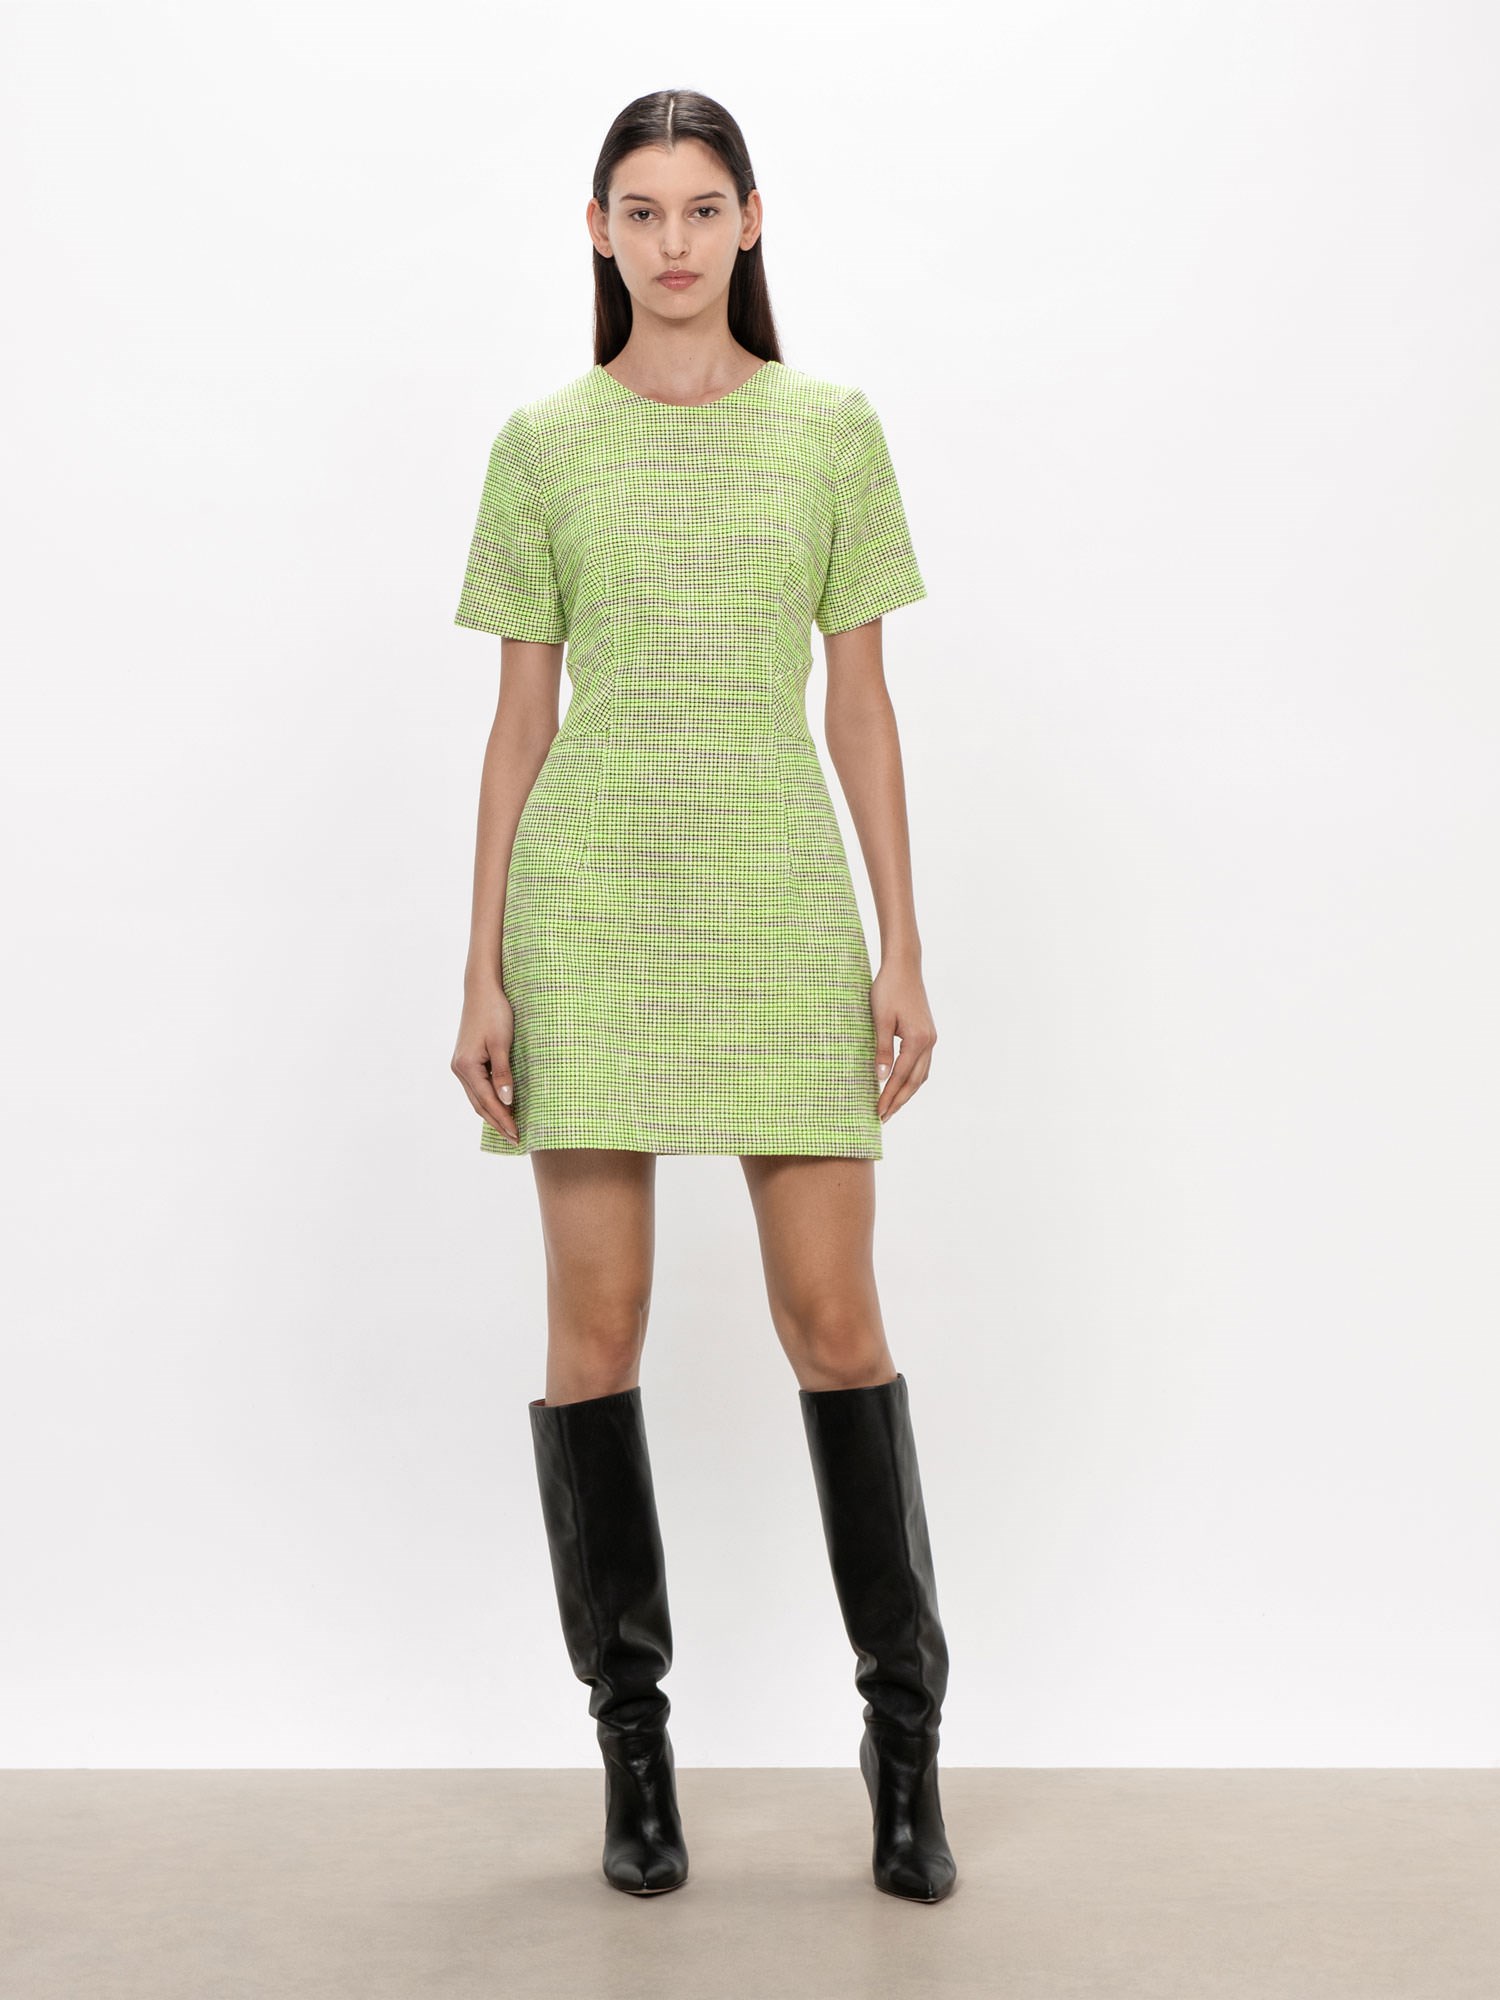 Neon Tweed Dress | Buy Dresses Online - Veronika Maine